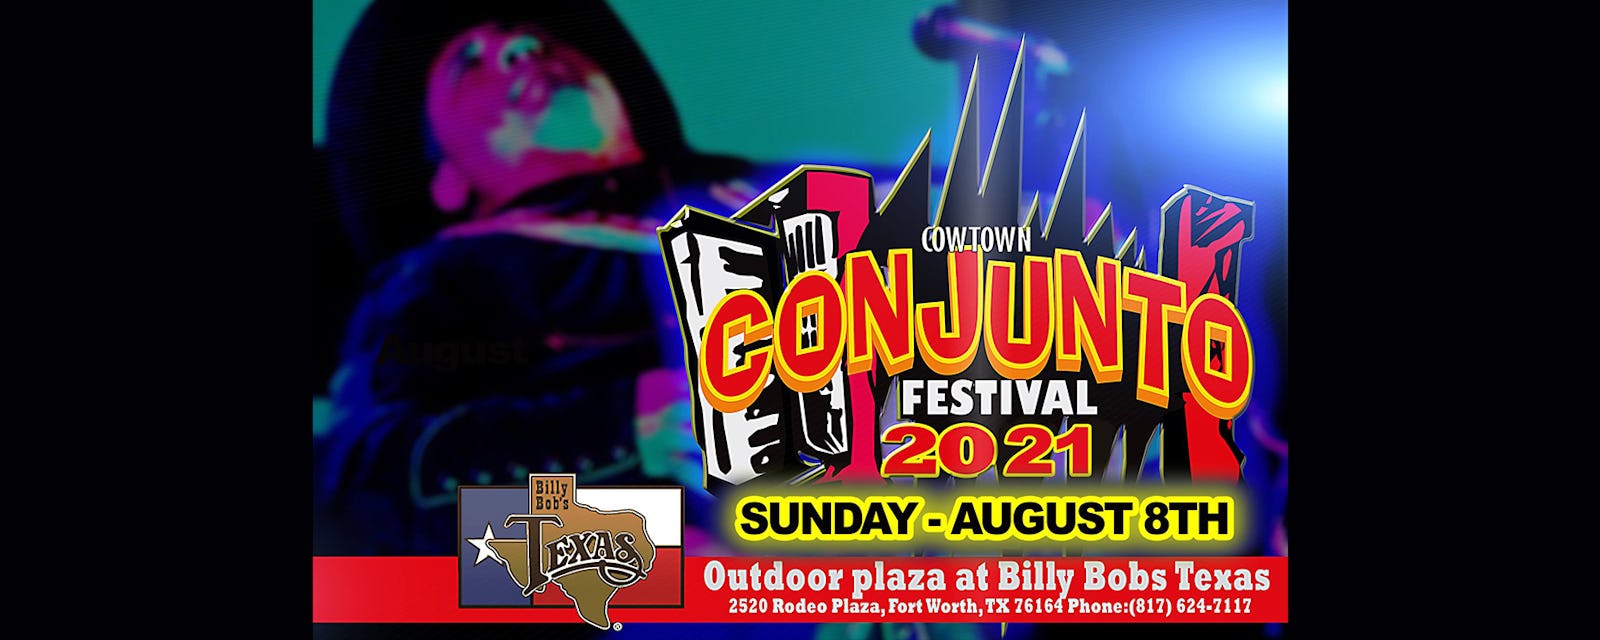 Cowtown Conjunto Festival Billy Bob's Texas